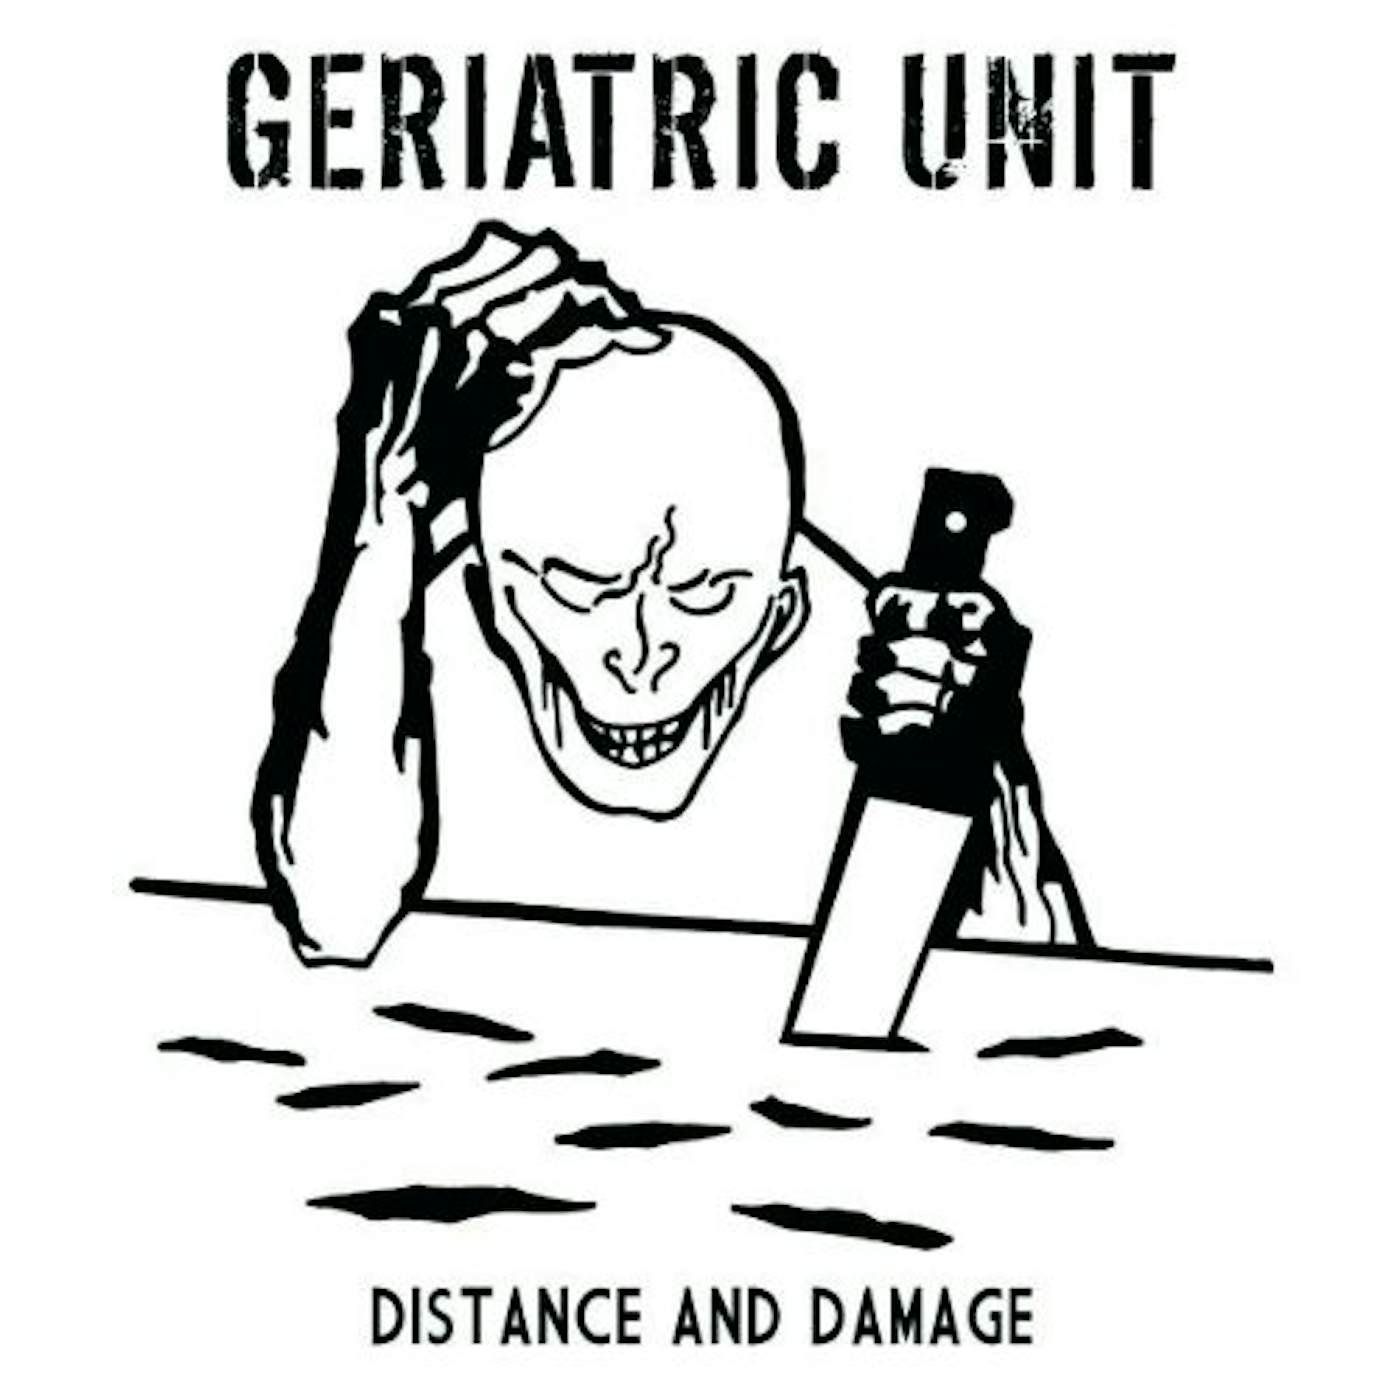 Geriatric Unit Distance And Damage Vinyl Record